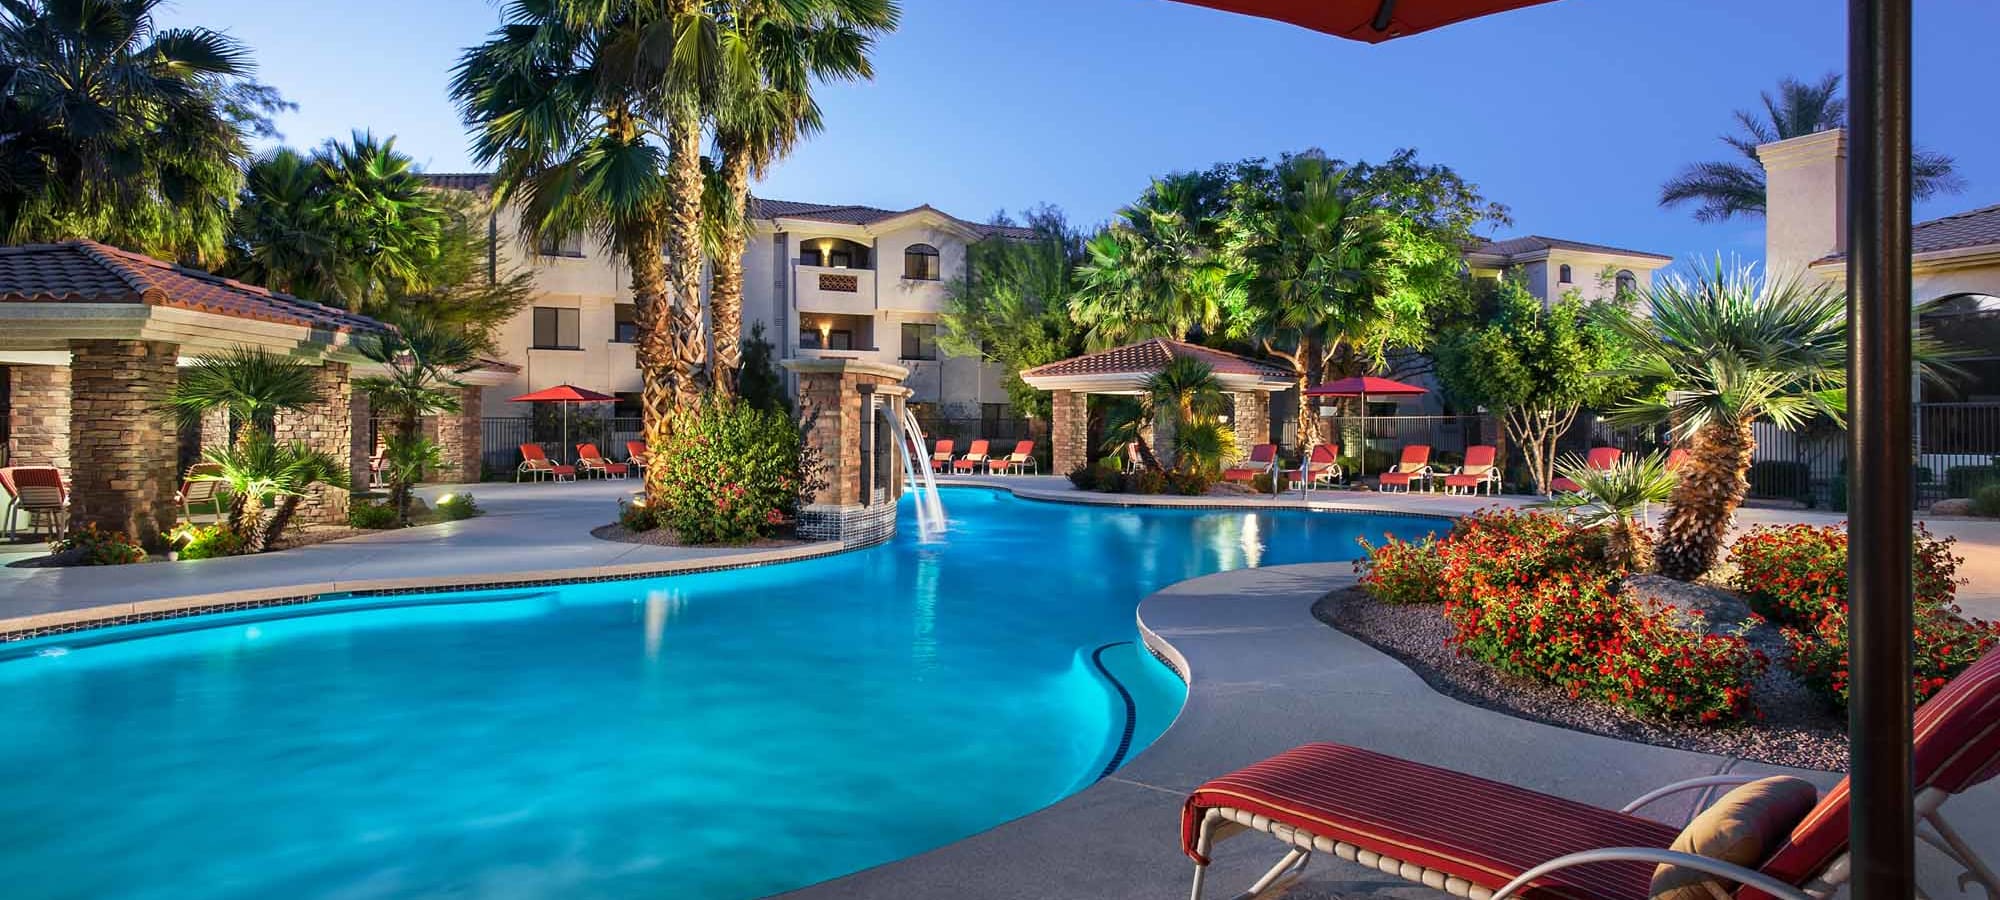 Large resort swimming pool at San Hacienda in Chandler, Arizona